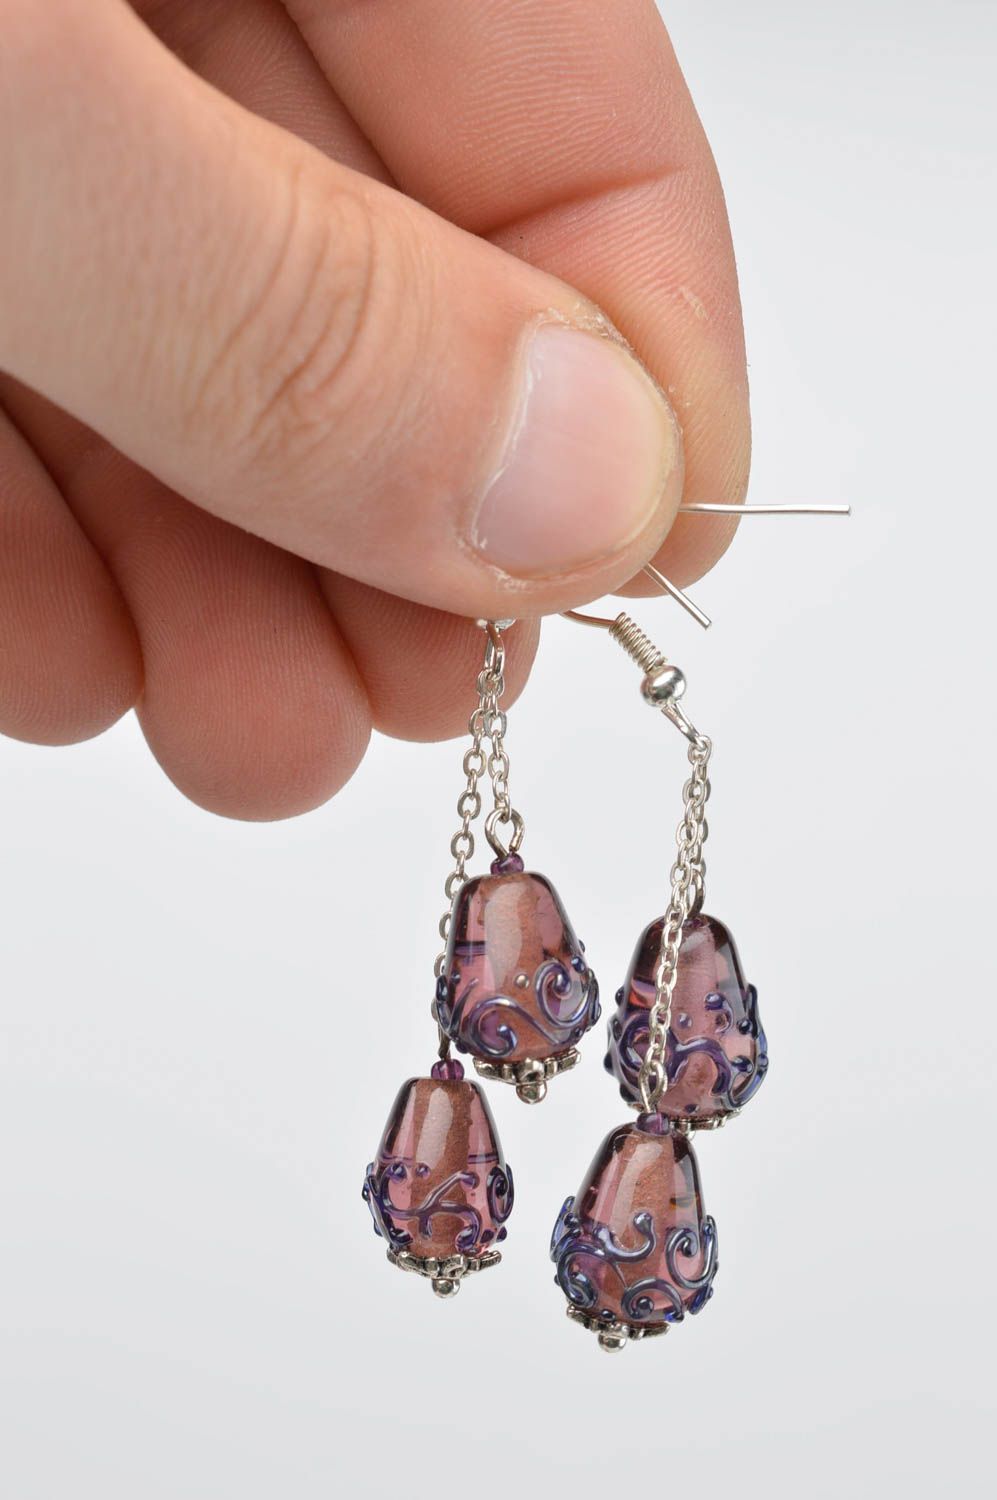 Handmade glass earrings elegant present for women unusual earrings with charms photo 5